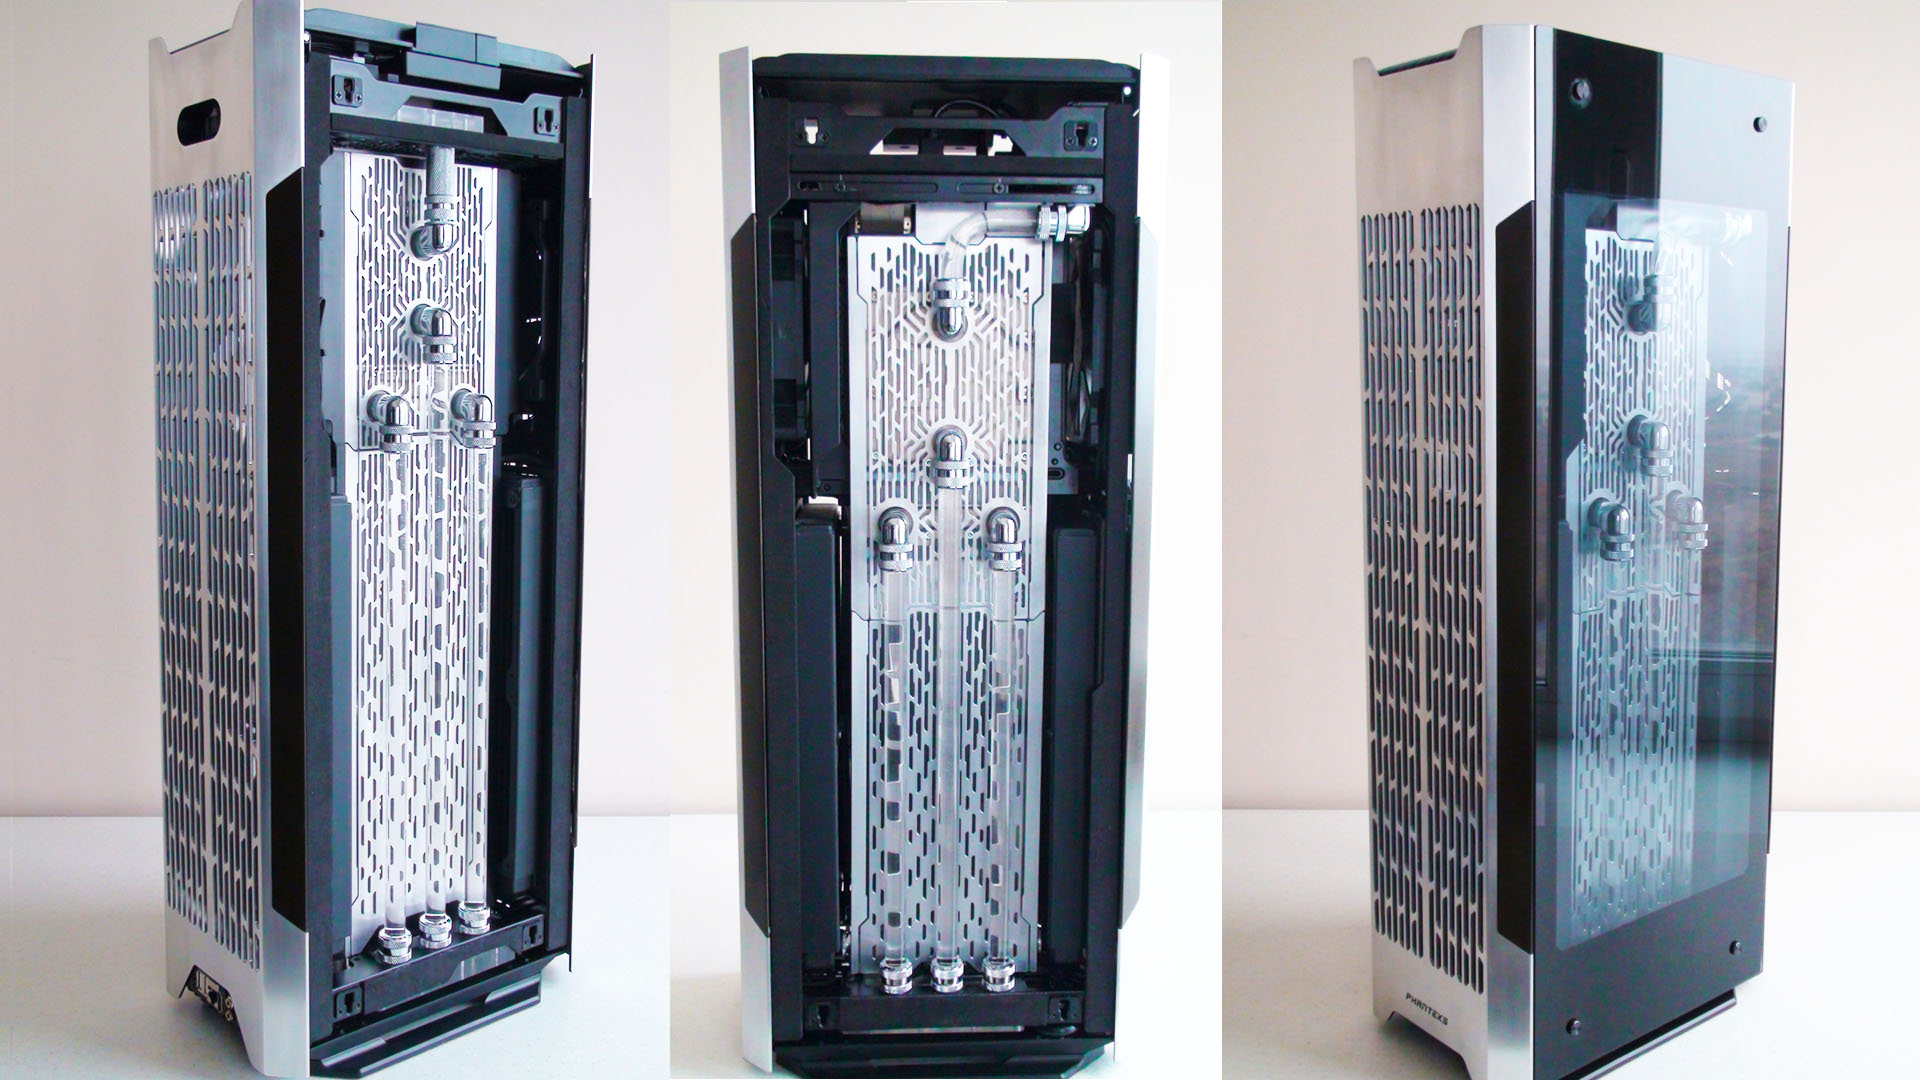 Best PC builds: Symmetrical water-cooled mini-ITX PC